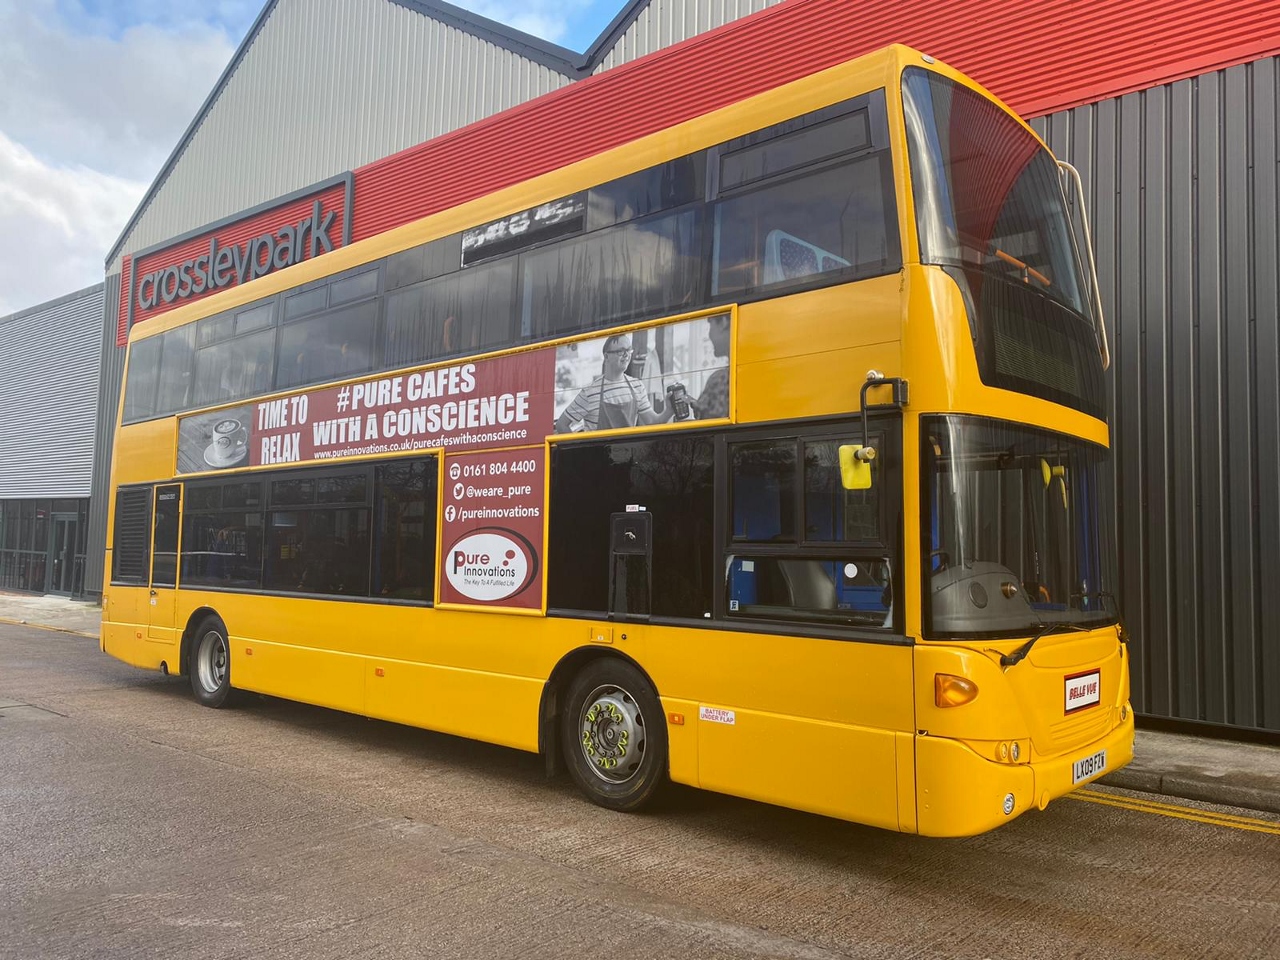 Belle Vue donates £25k of bus advertising